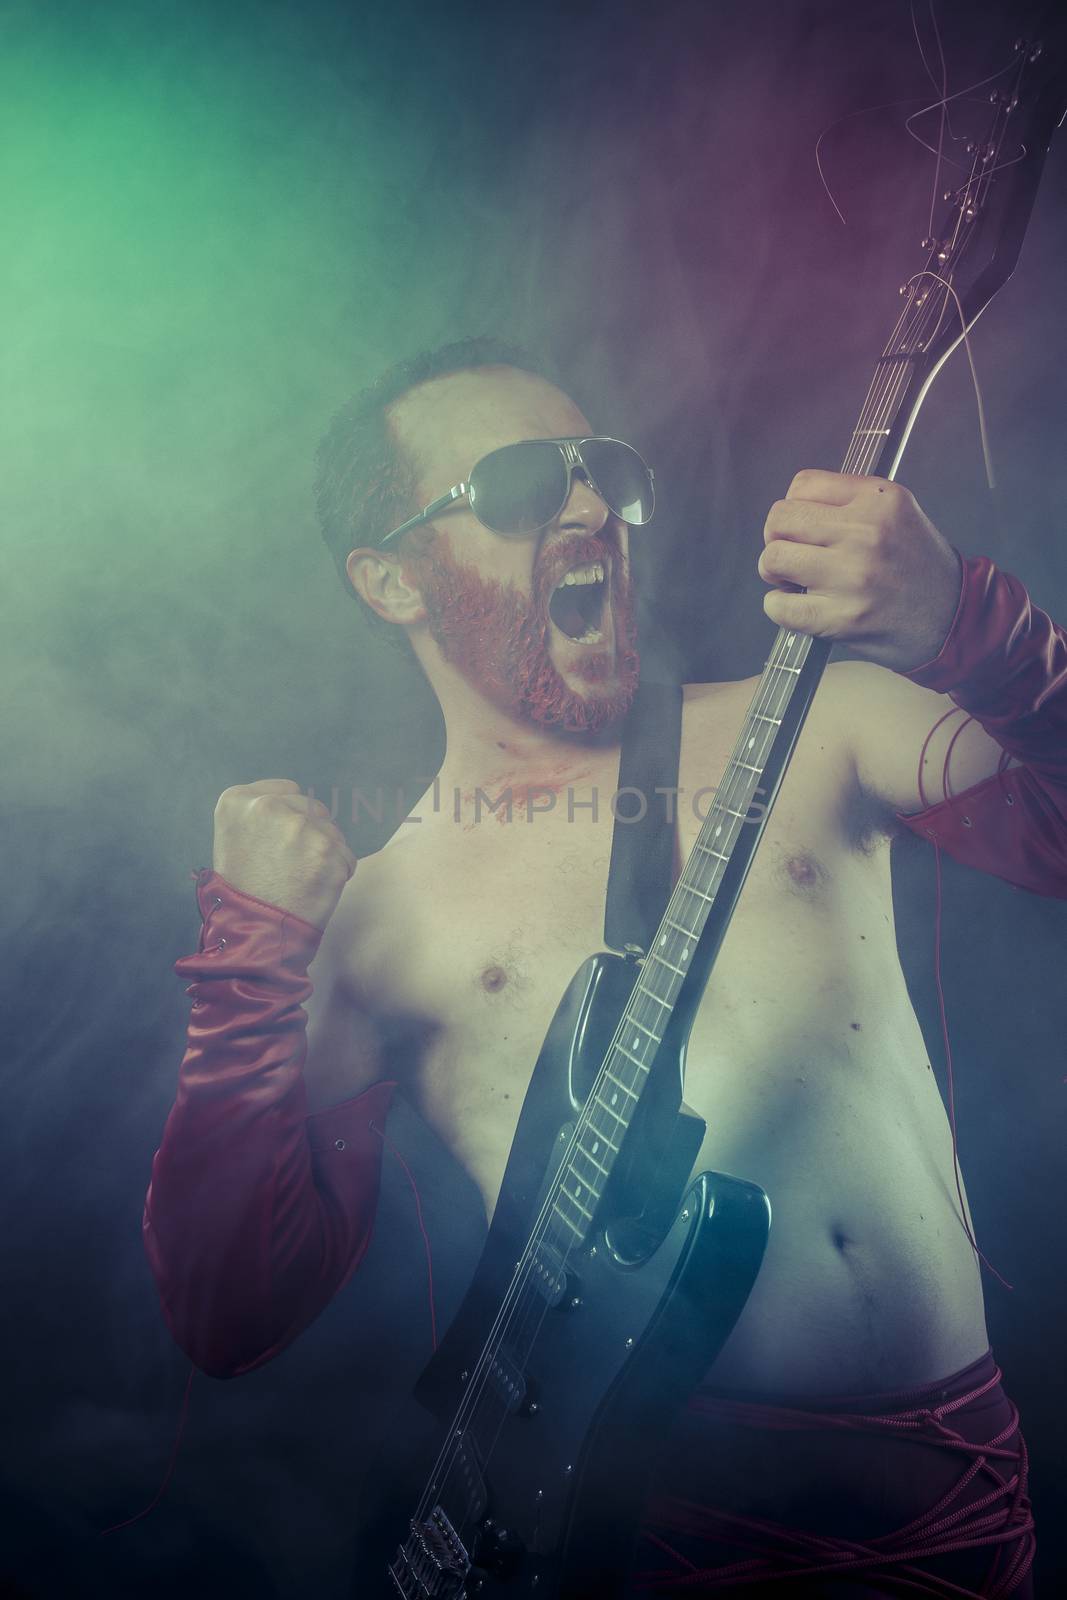 Metal, rocker man with electric guitar in a rock concert